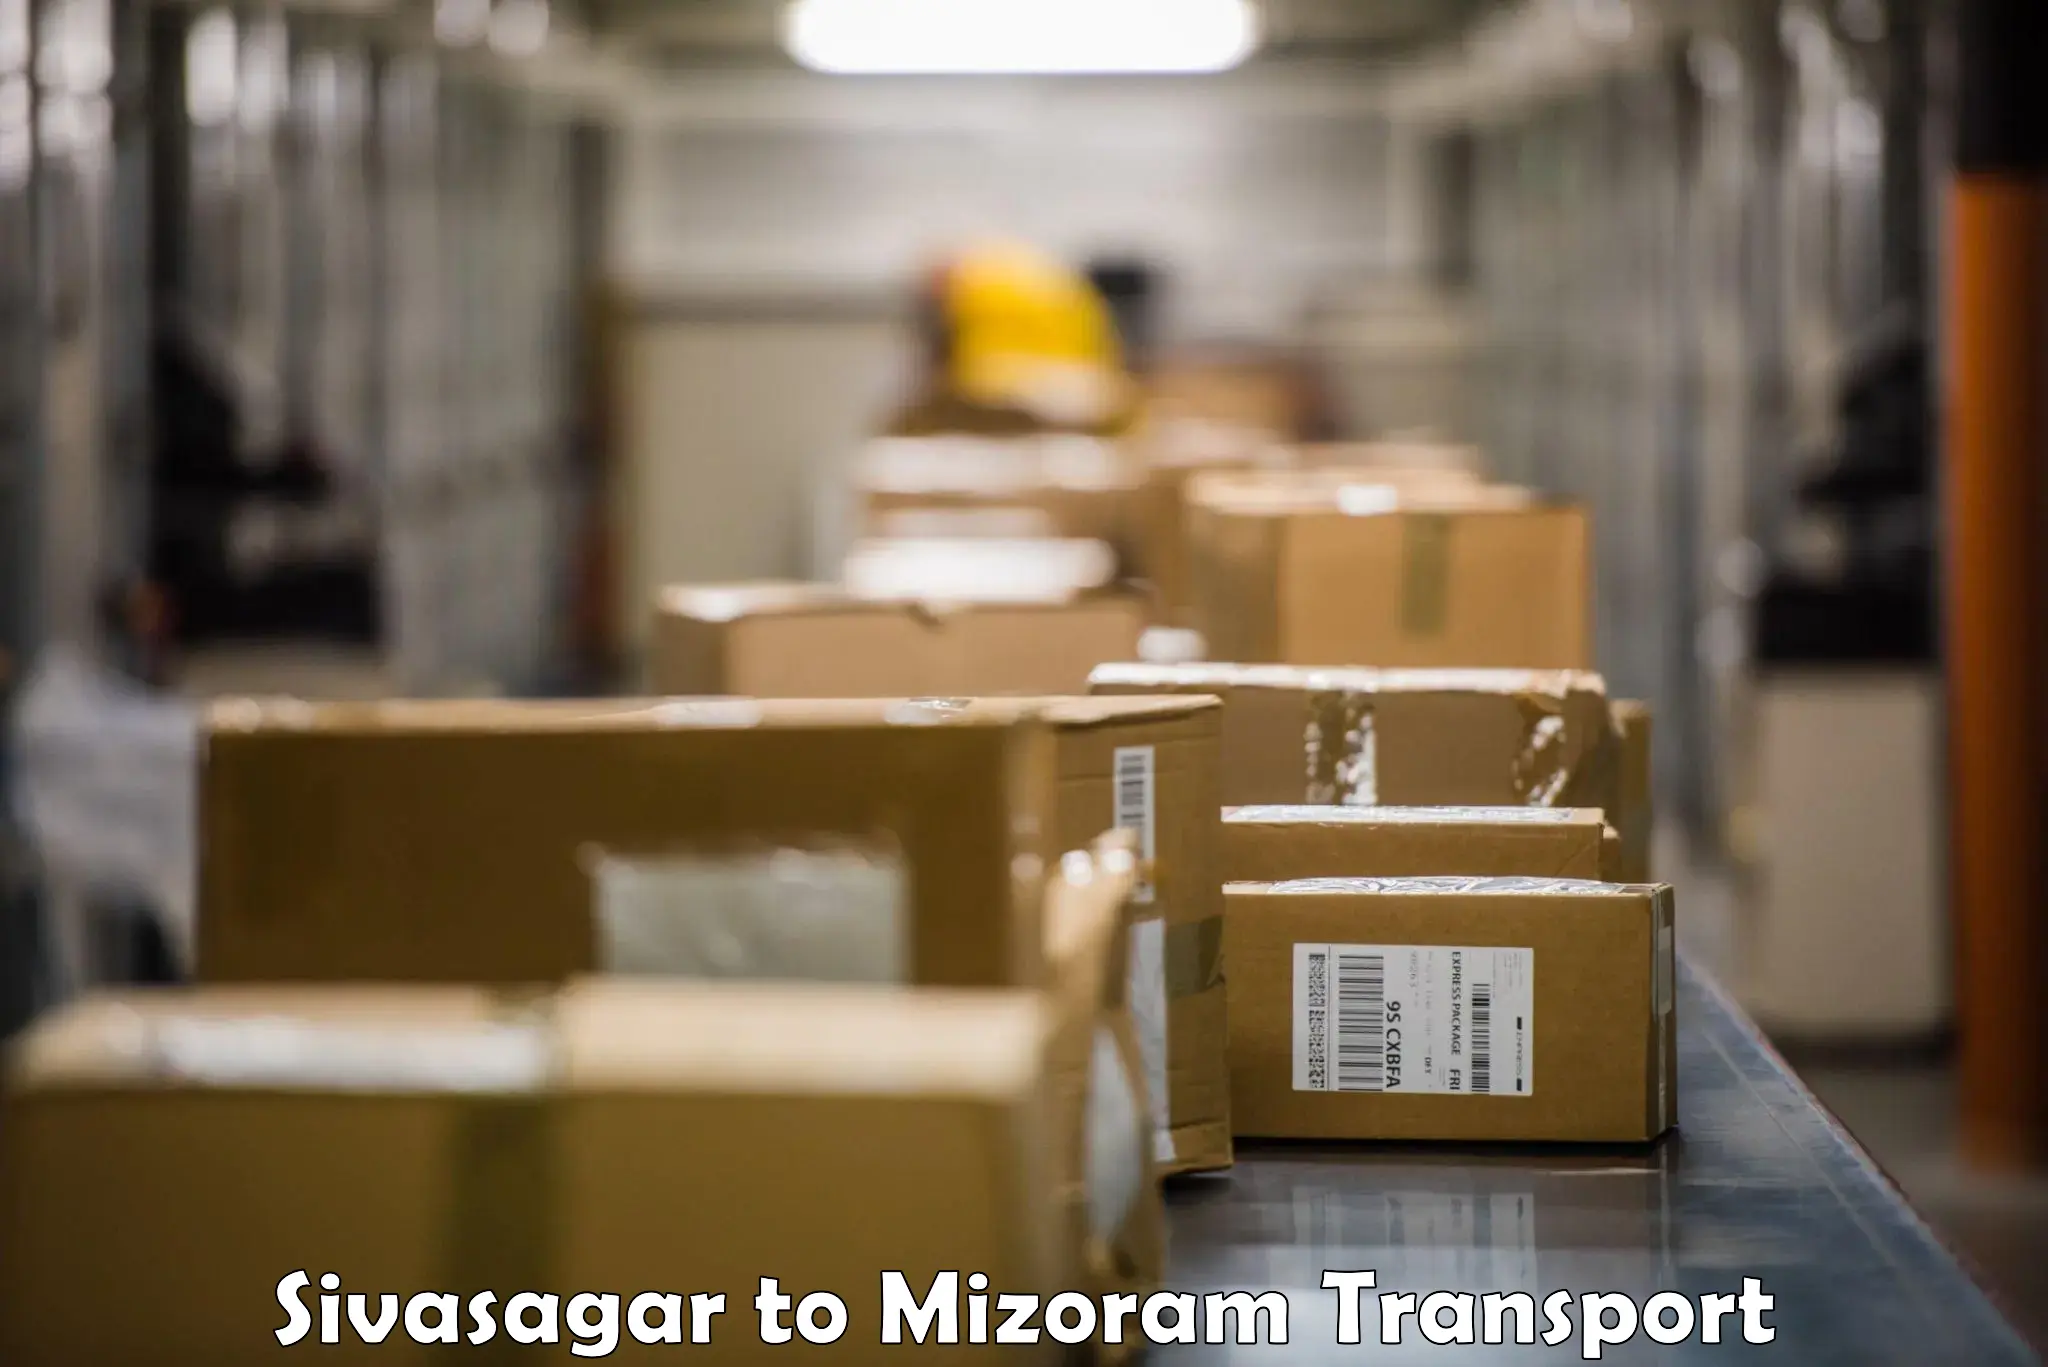 Truck transport companies in India Sivasagar to Siaha